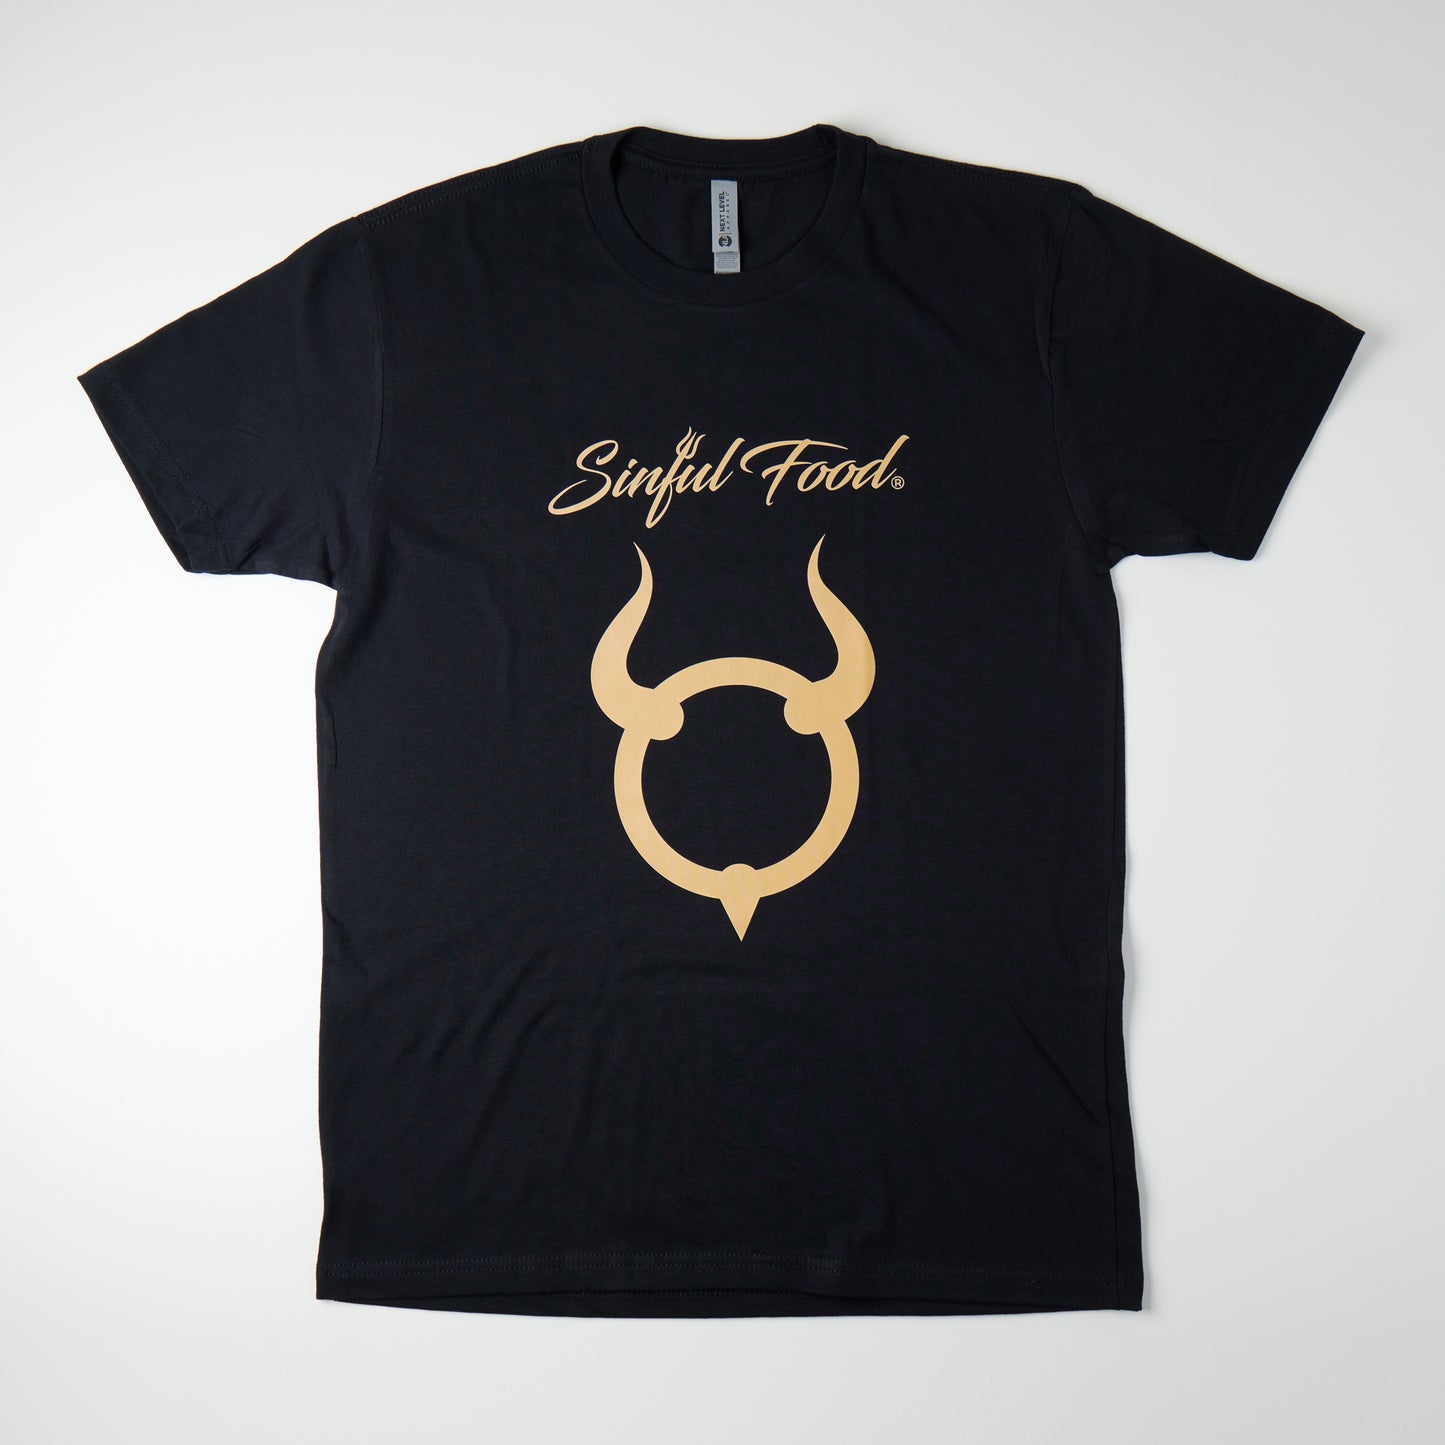 Sinful Food T-Shirt (Black)